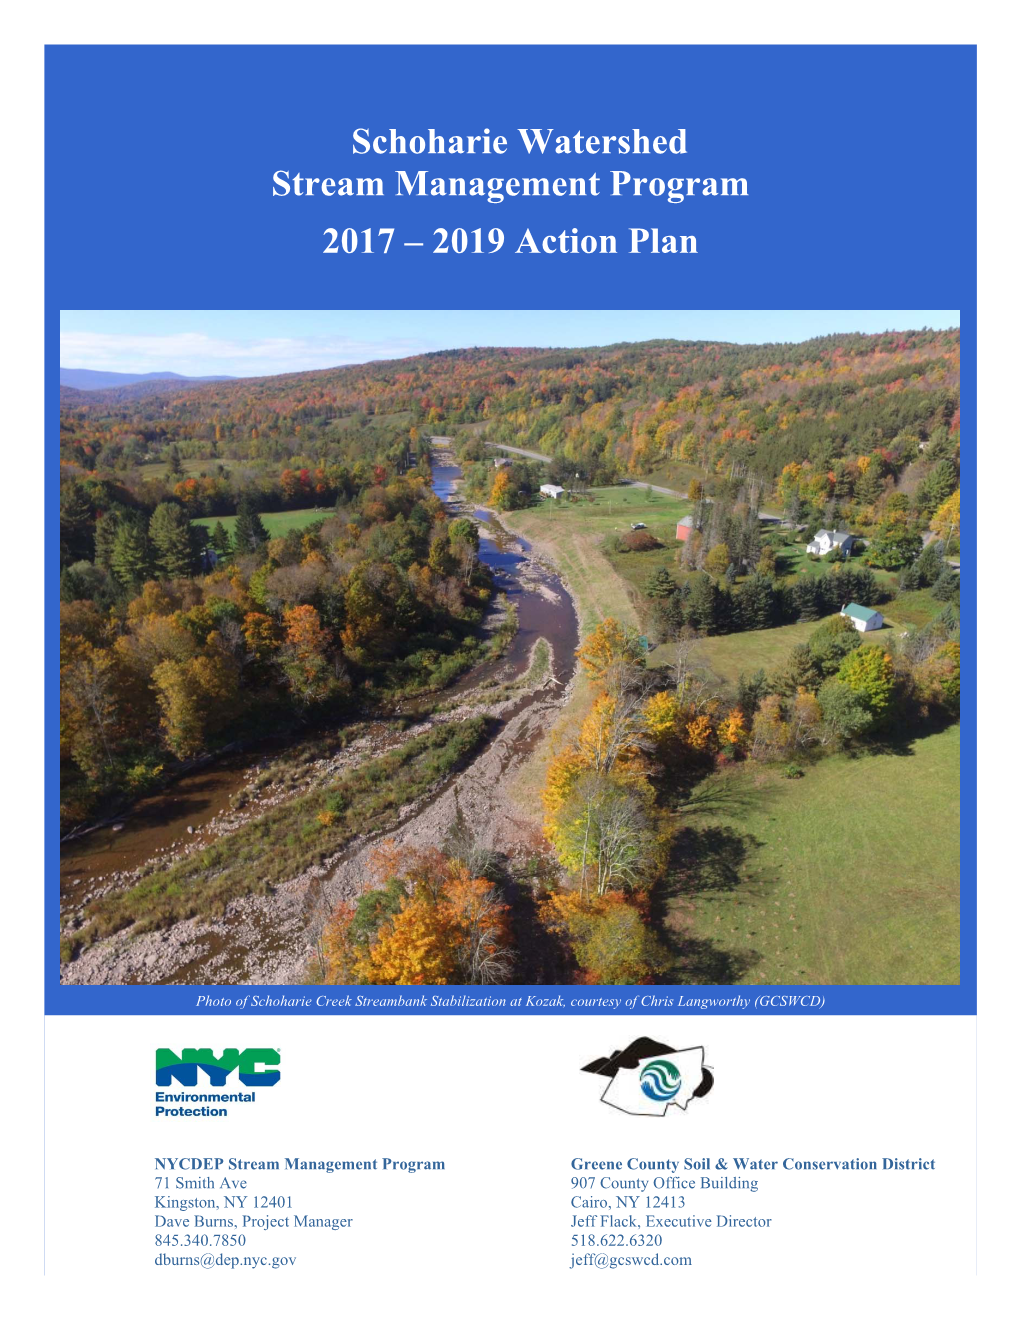 Schoharie Watershed Stream Management Program